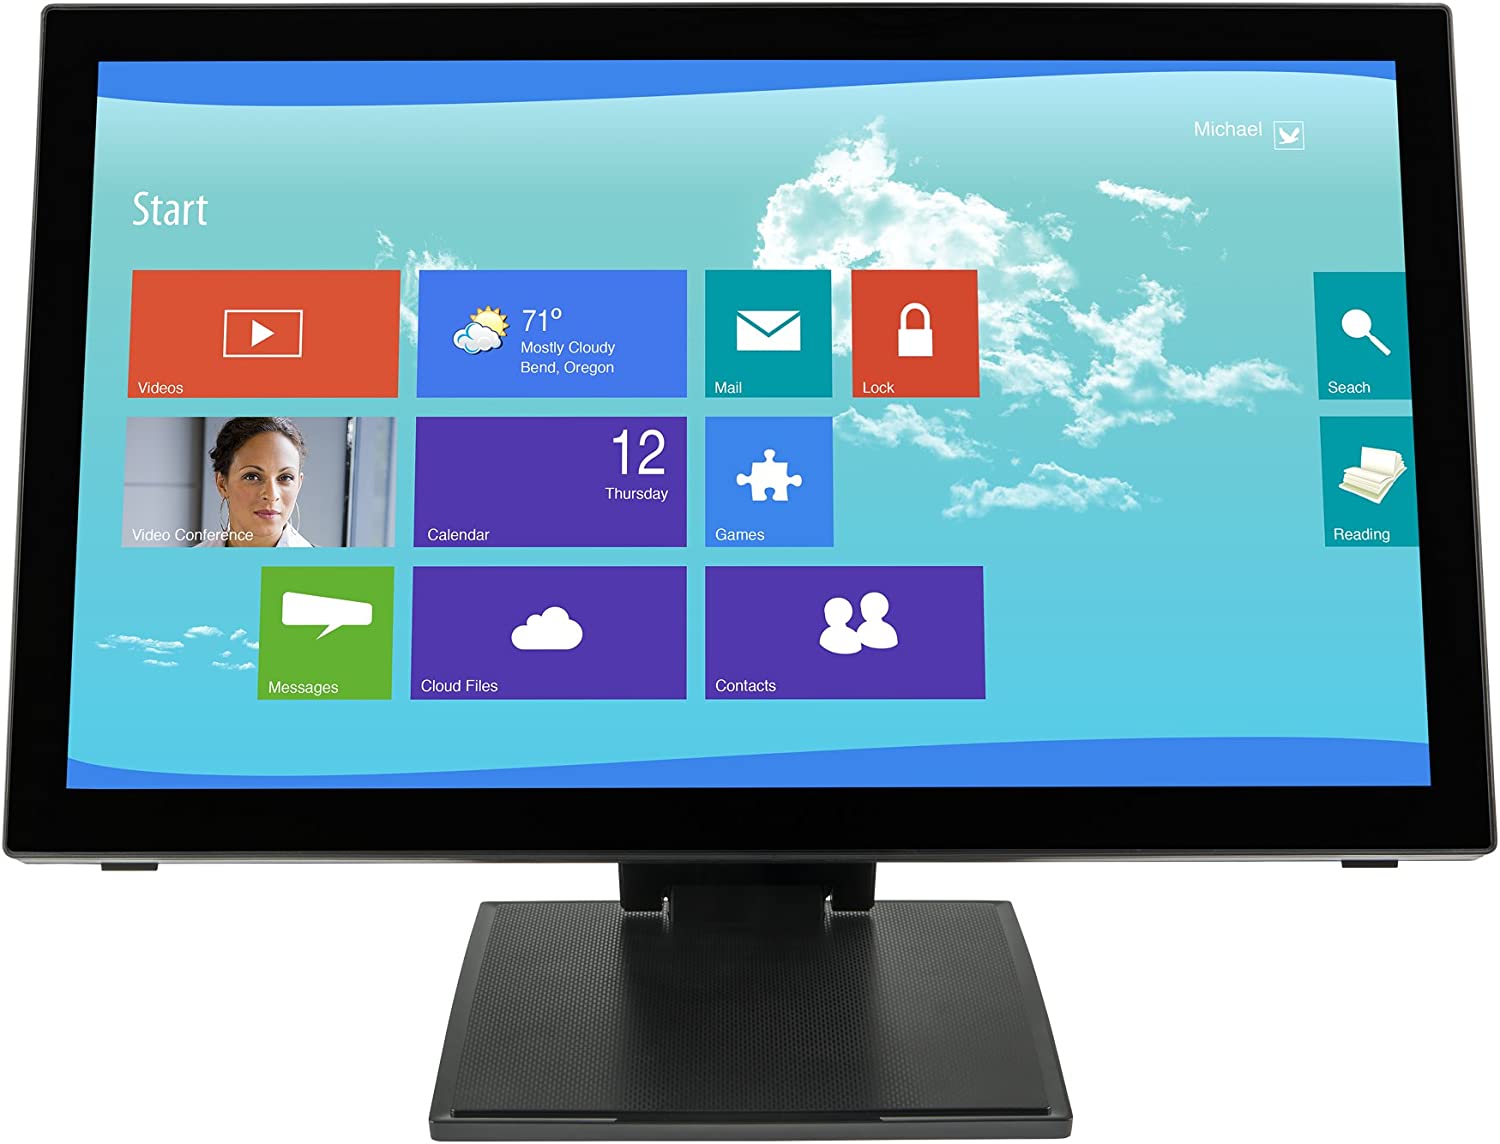 Planar PCT2265 997-7251-00 22-Inch Screen LCD Monitor